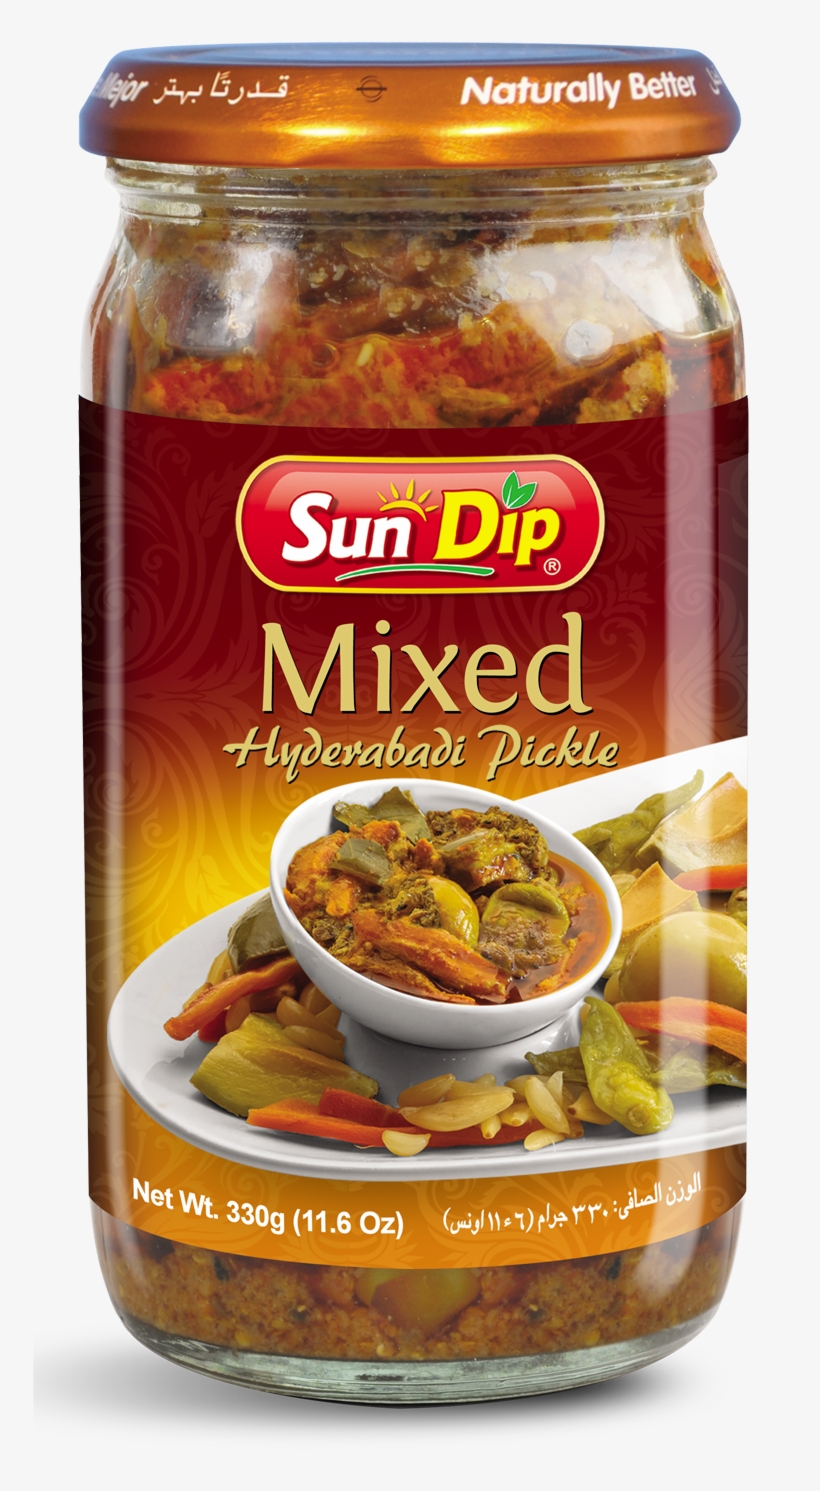 Sundip Mixed Hyderabadi Pickle - Sundip Mixed Pickle In Oil 11.6 Oz (330 Grams), transparent png #3959217